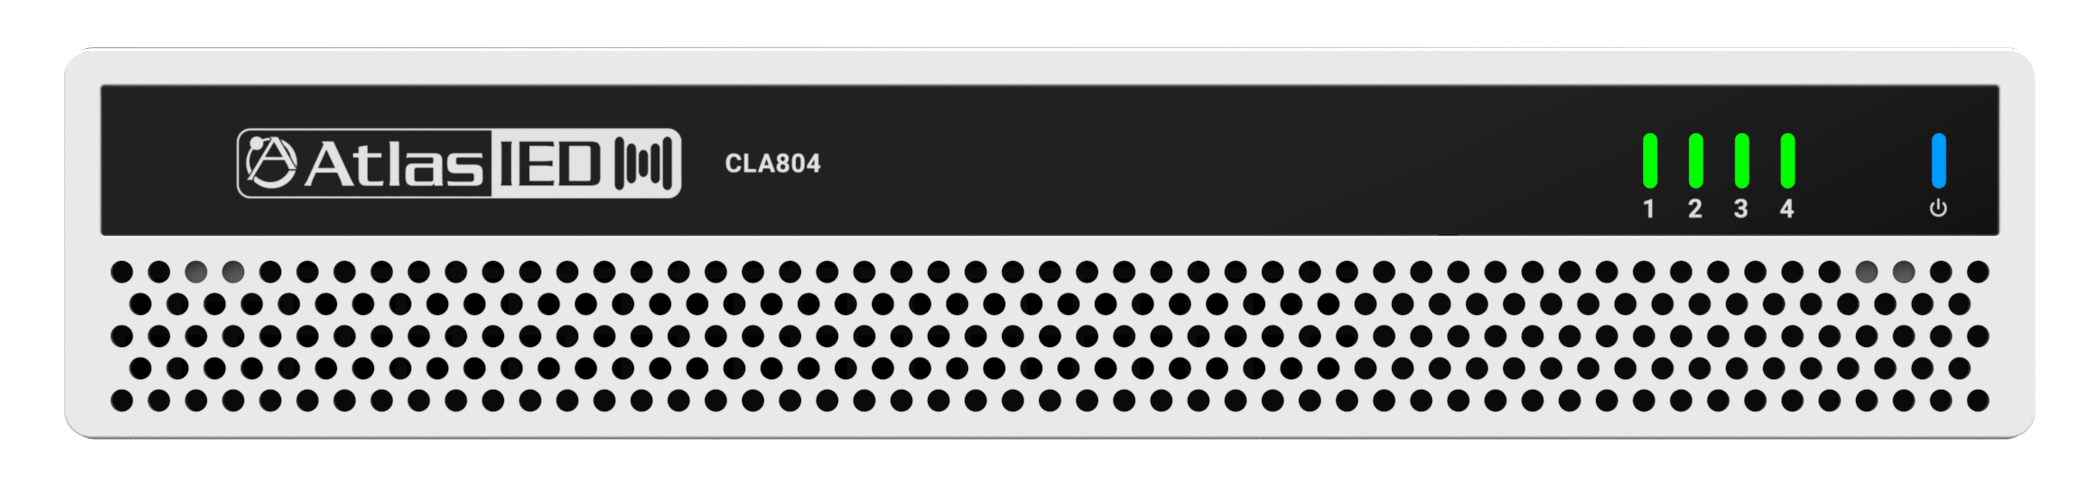 CLA804 Front Panel Amplifiers | AtlasIED